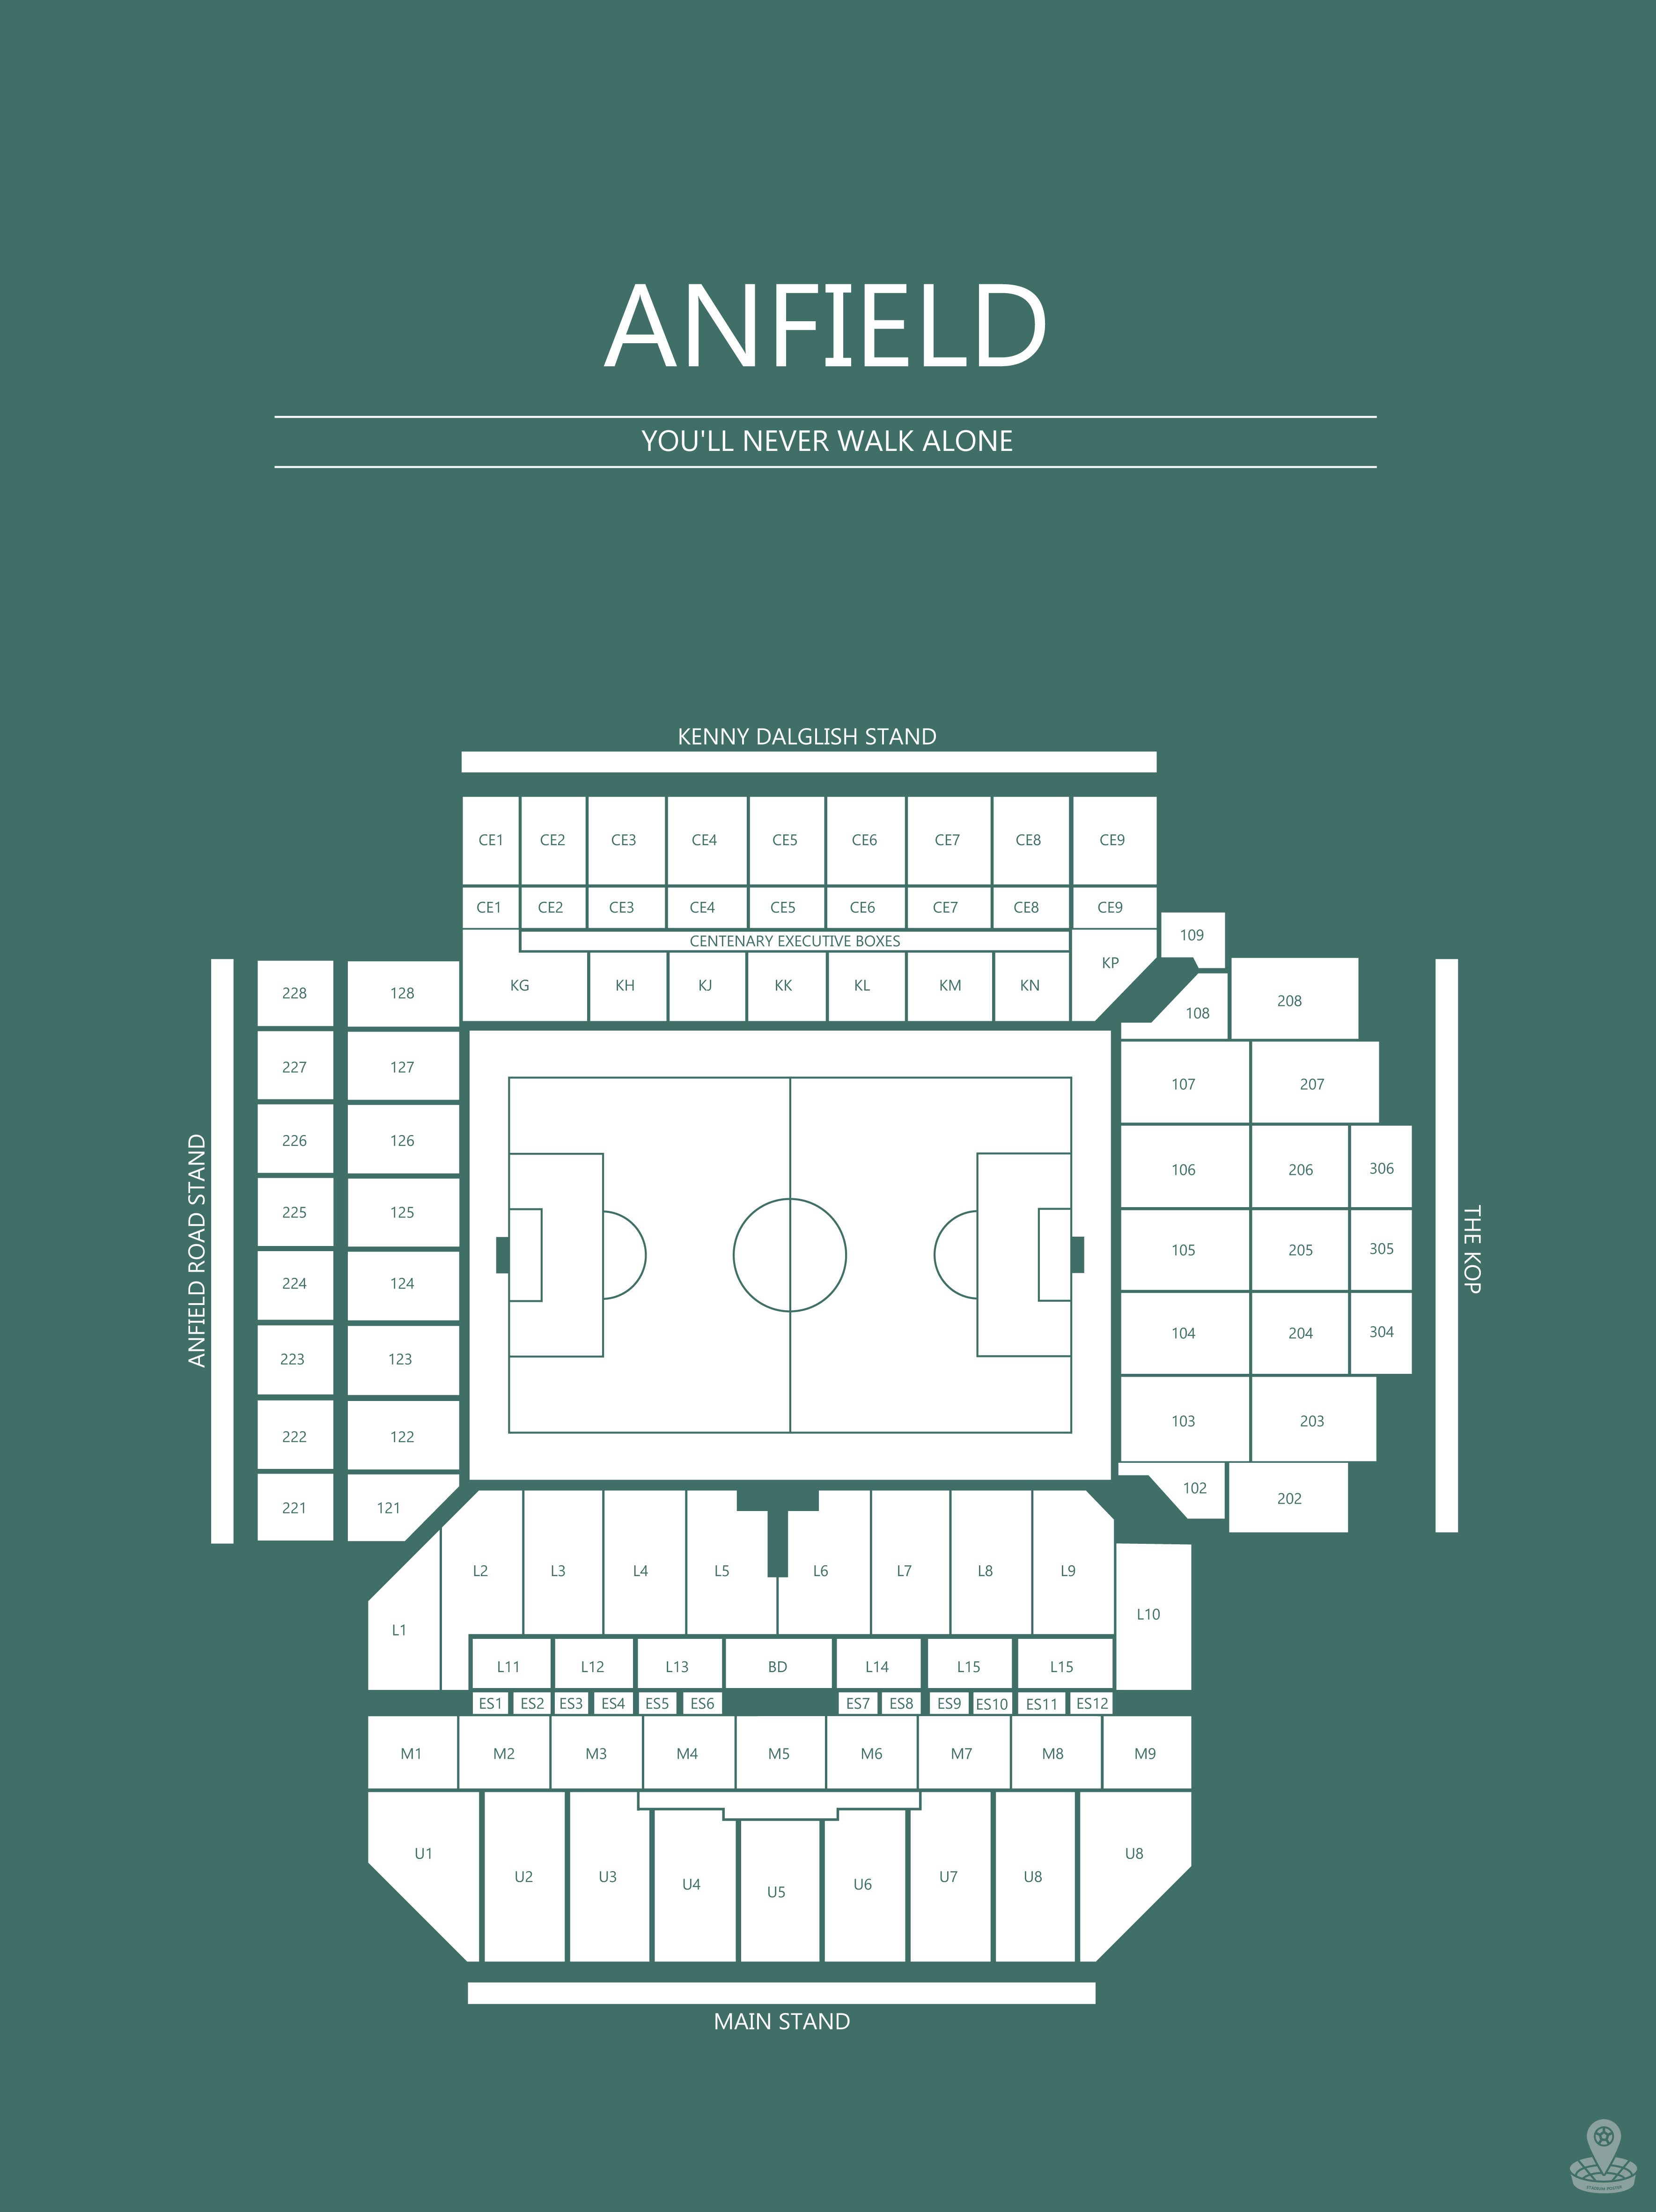 Fodbold plakat Liverpool Anfield stadium i mørkegrøn